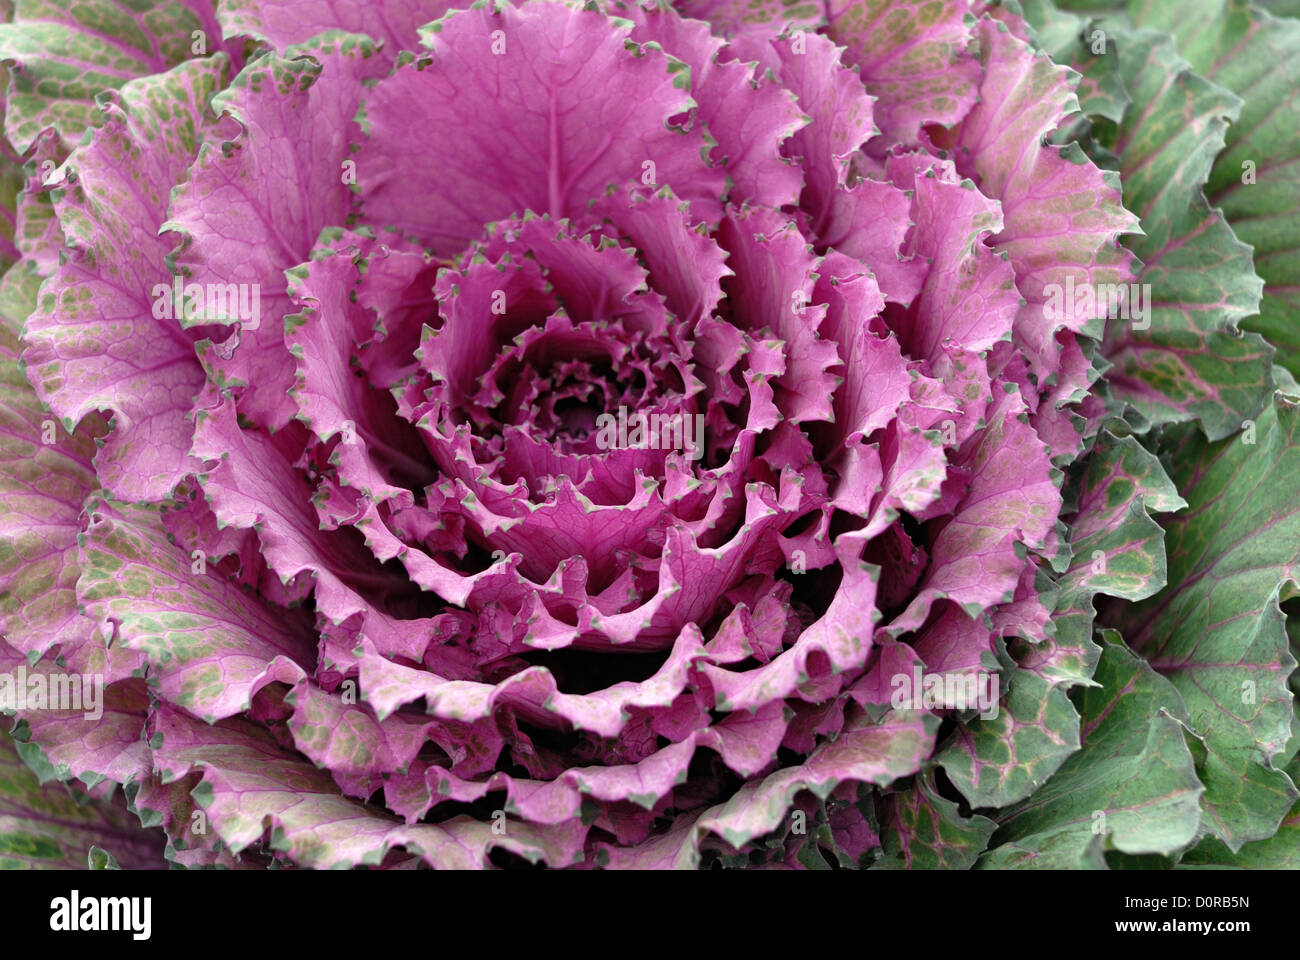 Decorative cabbage Stock Photo